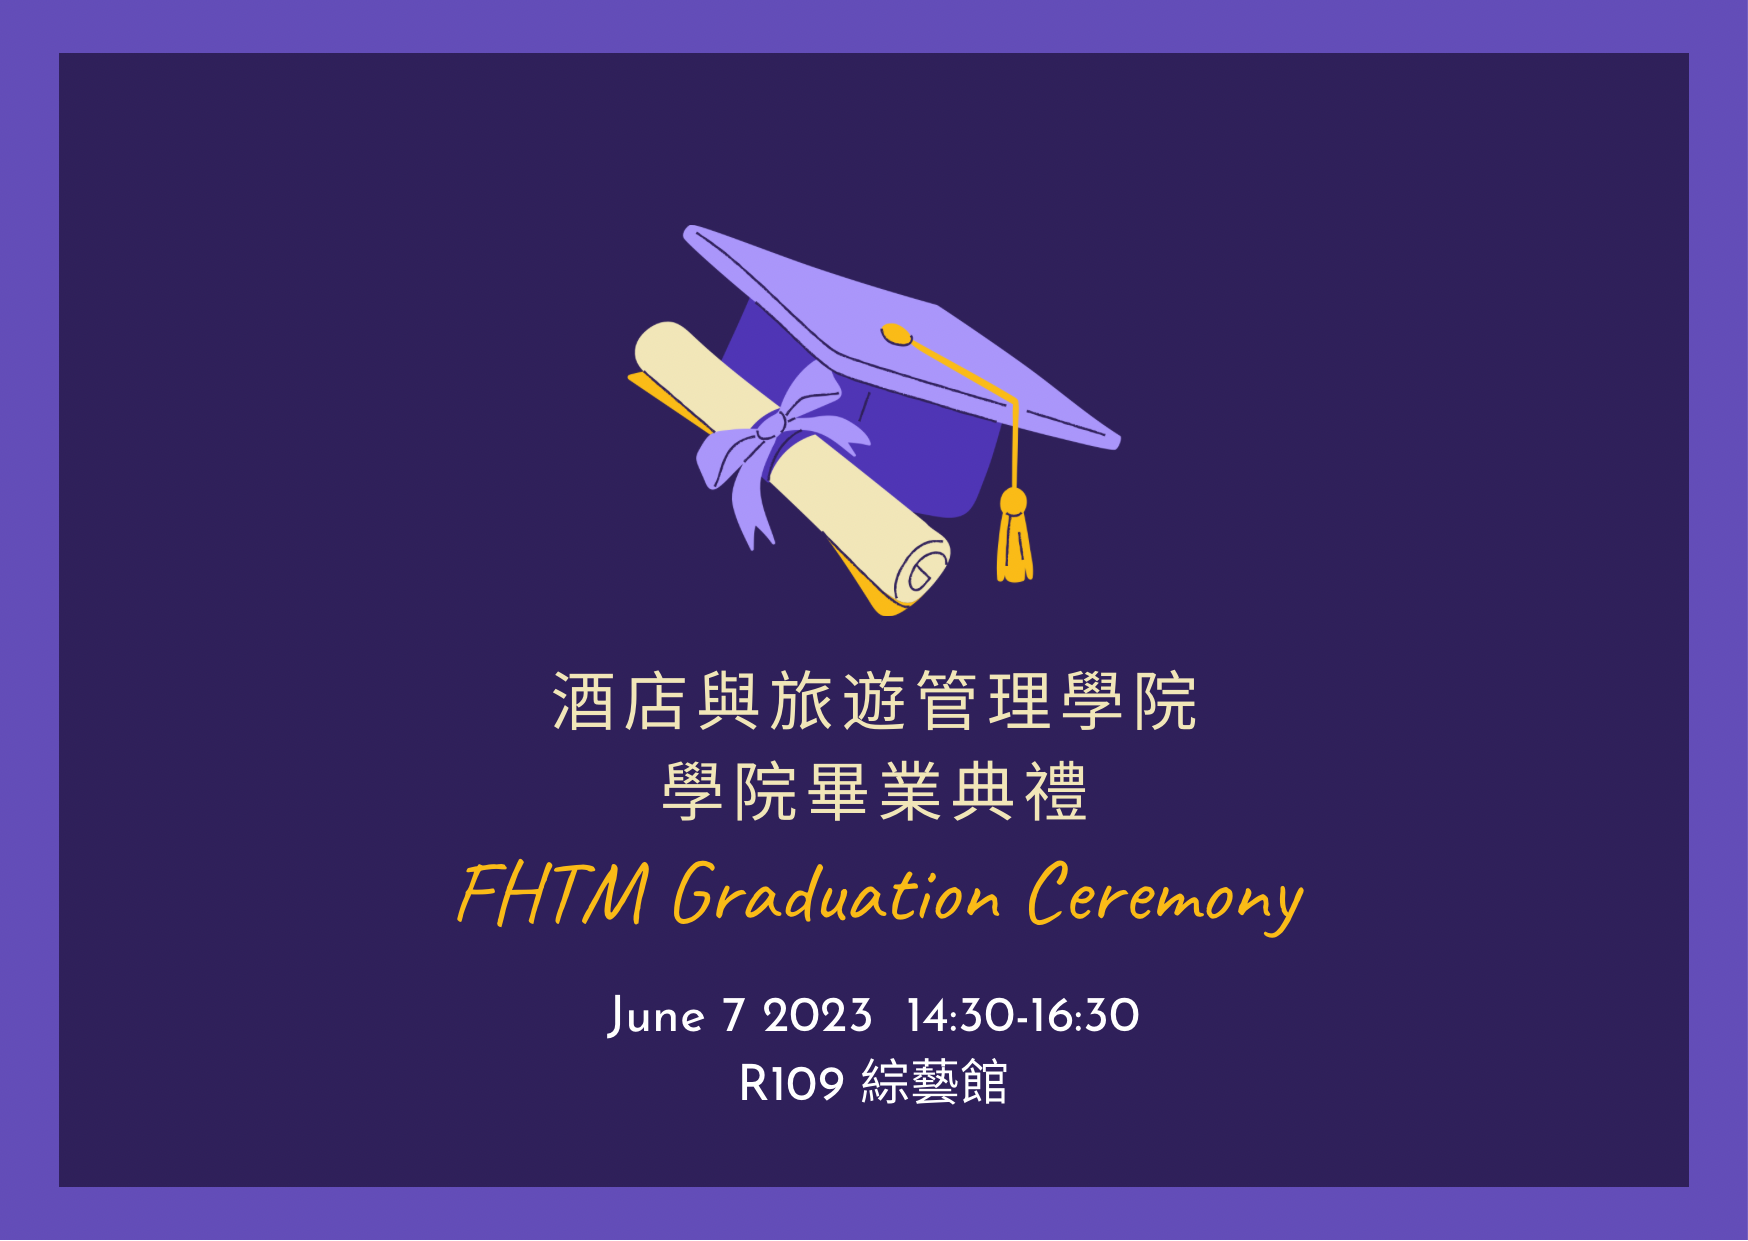 FHTM graduation ceremony 2023